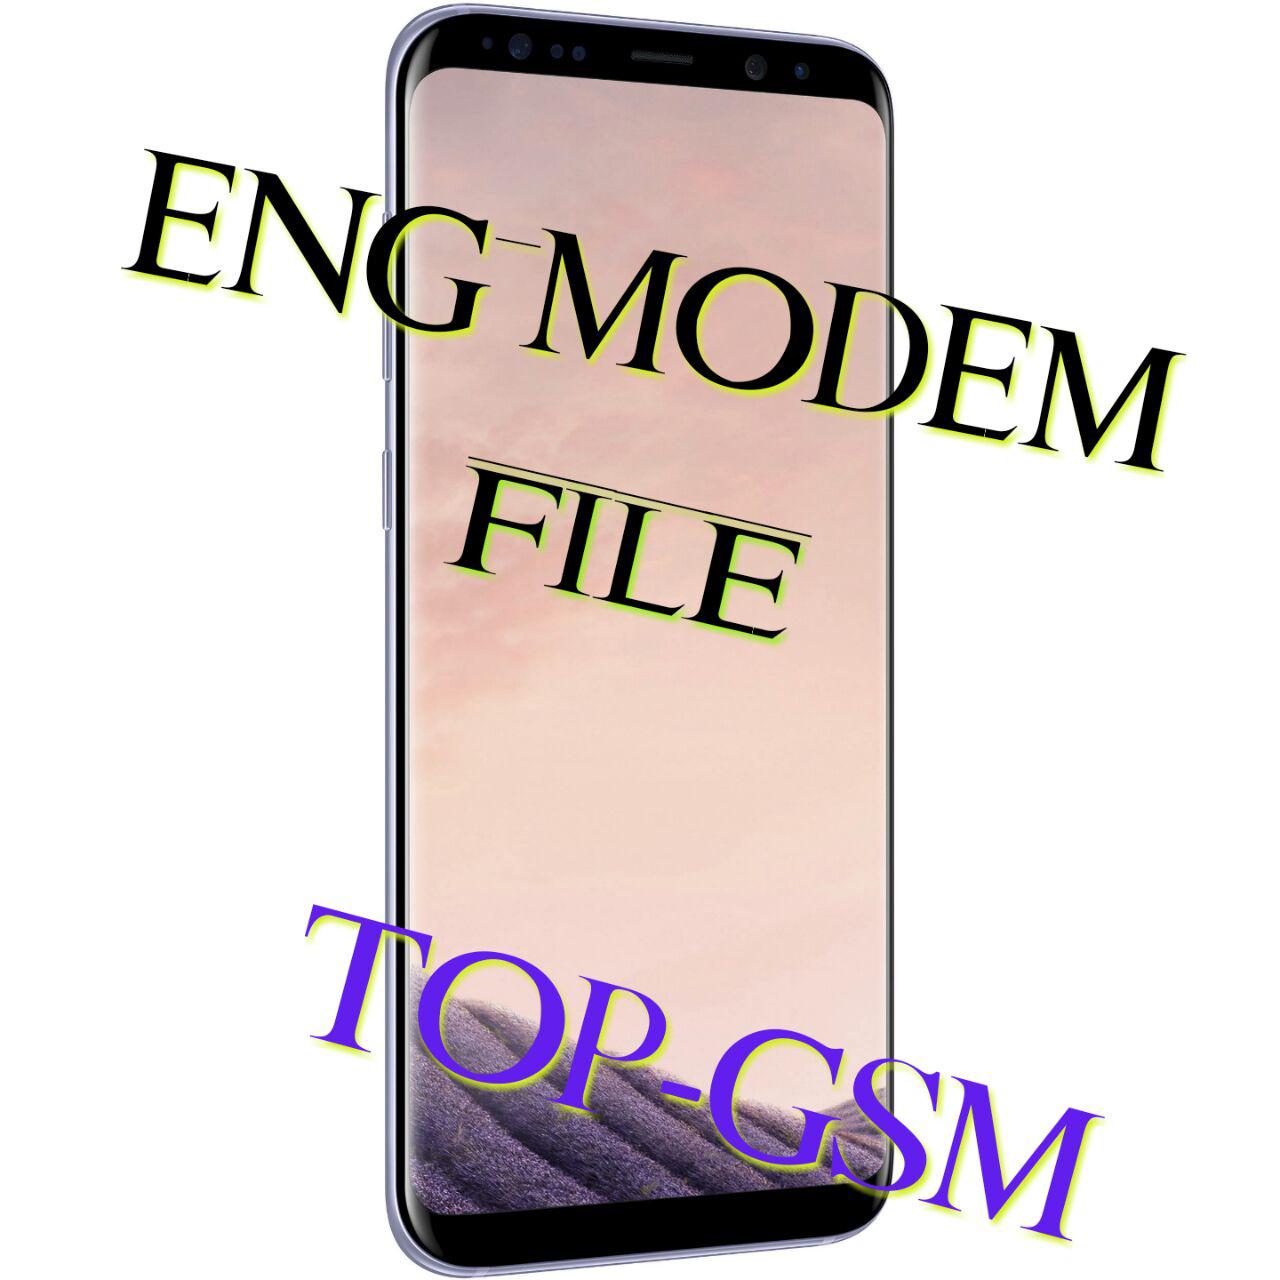 فایل ENG MODEM سامسونگ G925T-U1 حل مشکل سریال و بیسباند و..